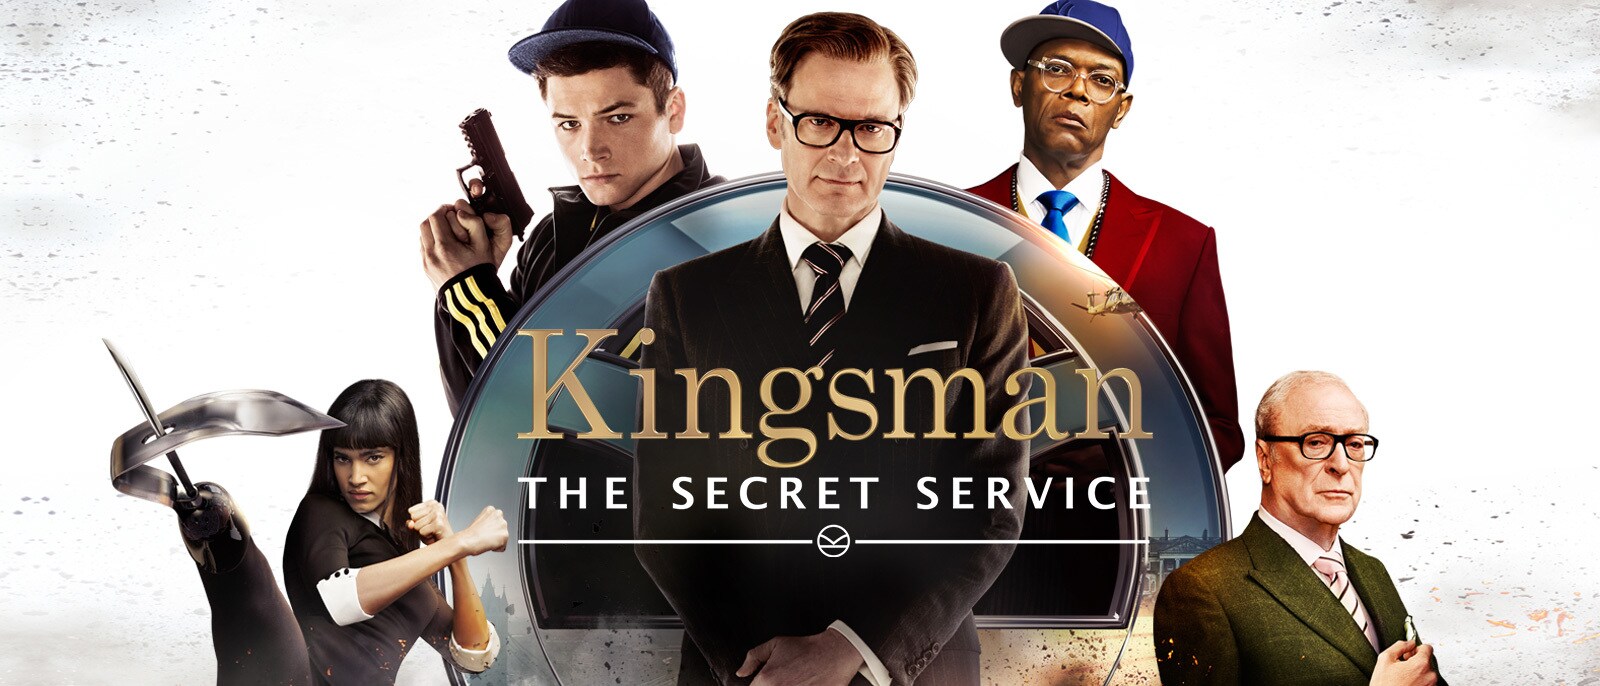 watch kingsman 2 online for free